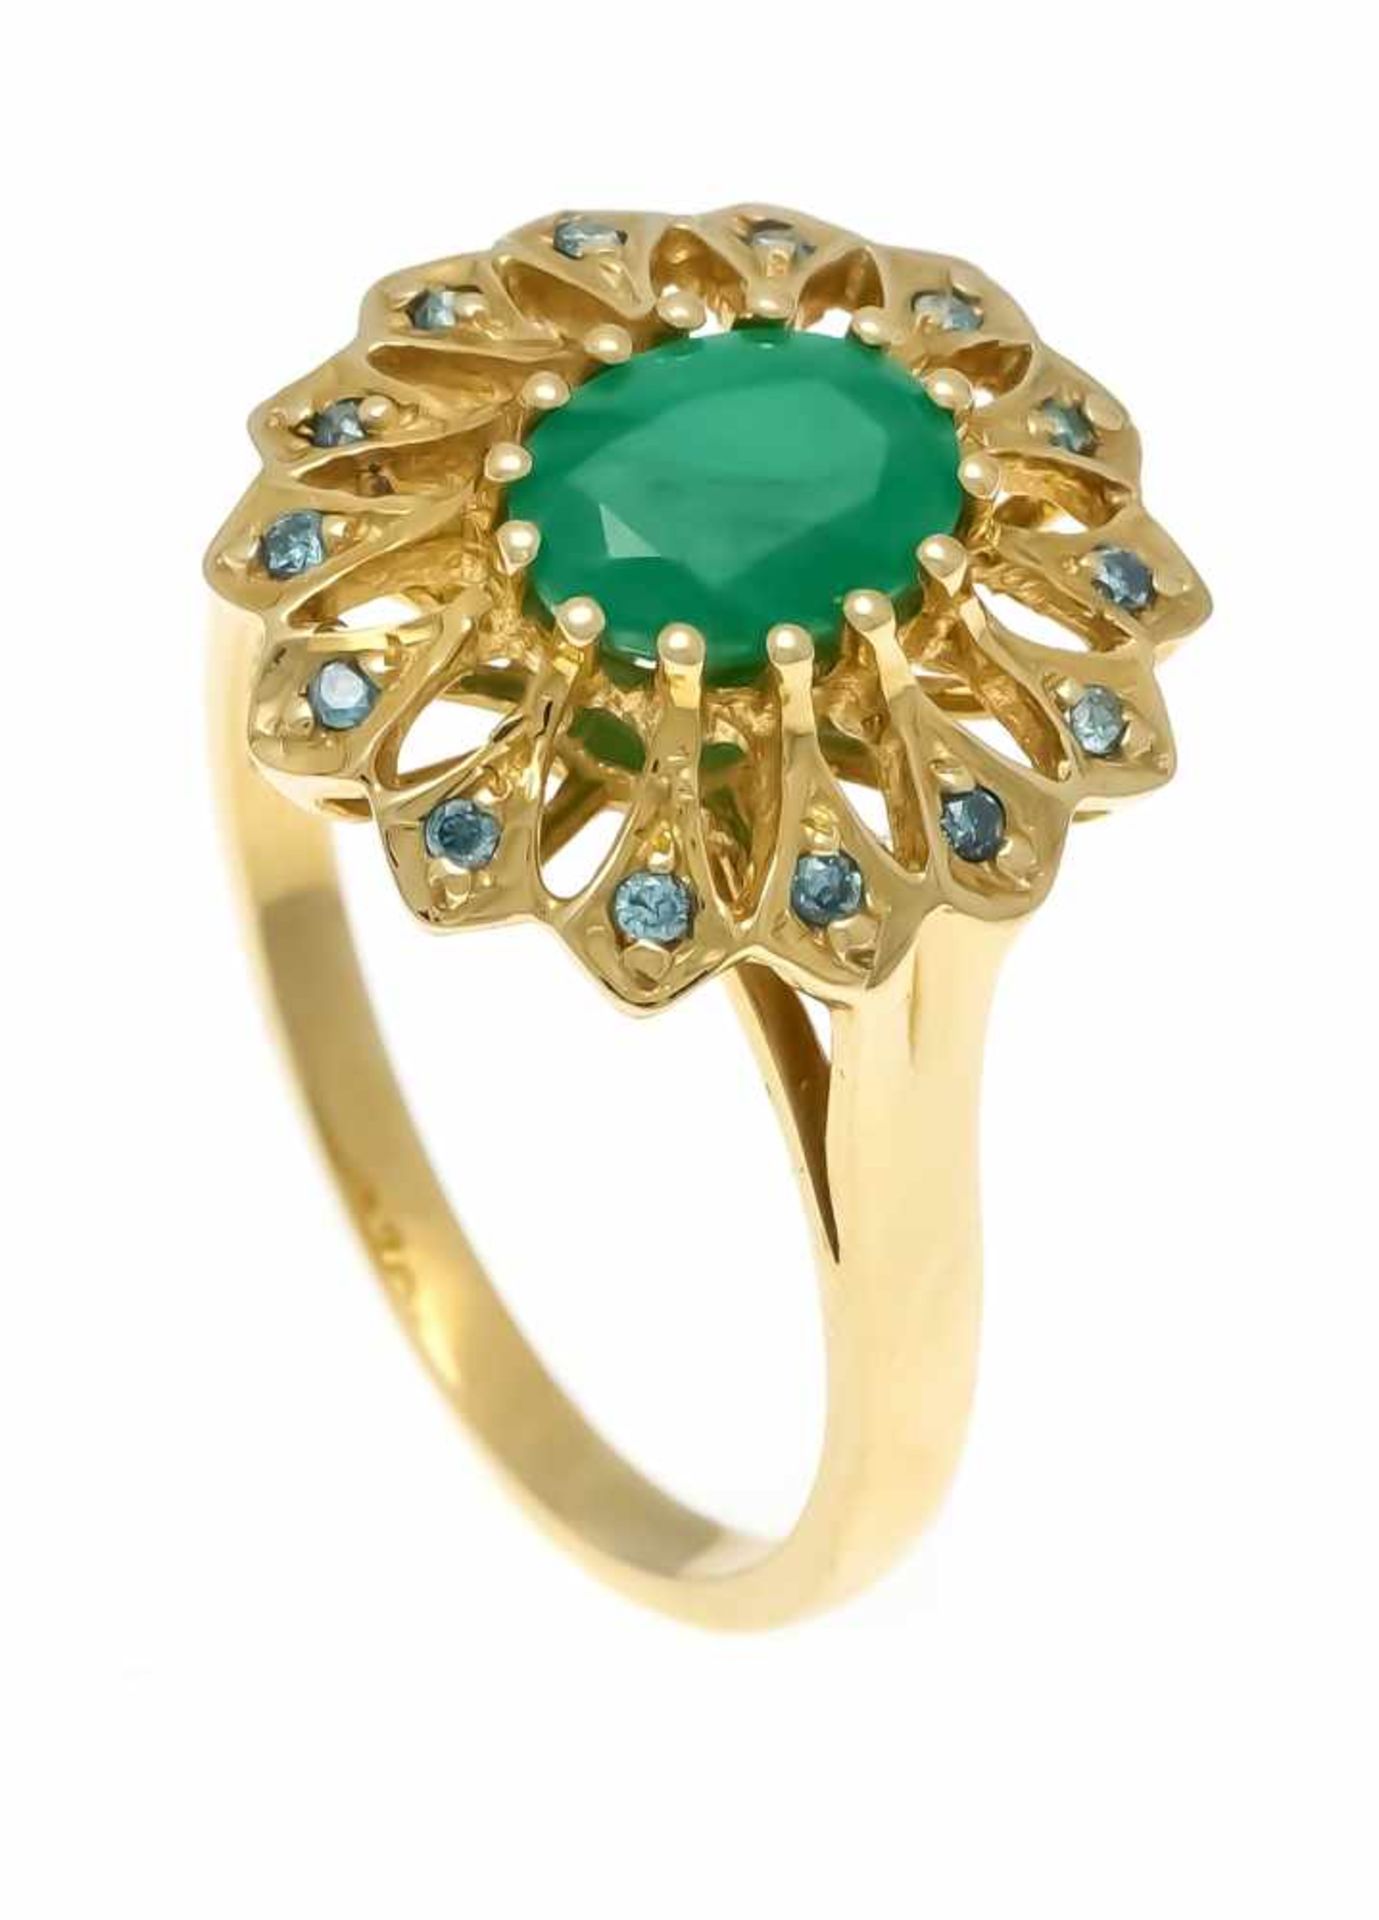 Harry Ivens Smaragd-Brillant-Ring GG 585/000 mit einem oval fac. Smaragd 8 x 6 mm und 14